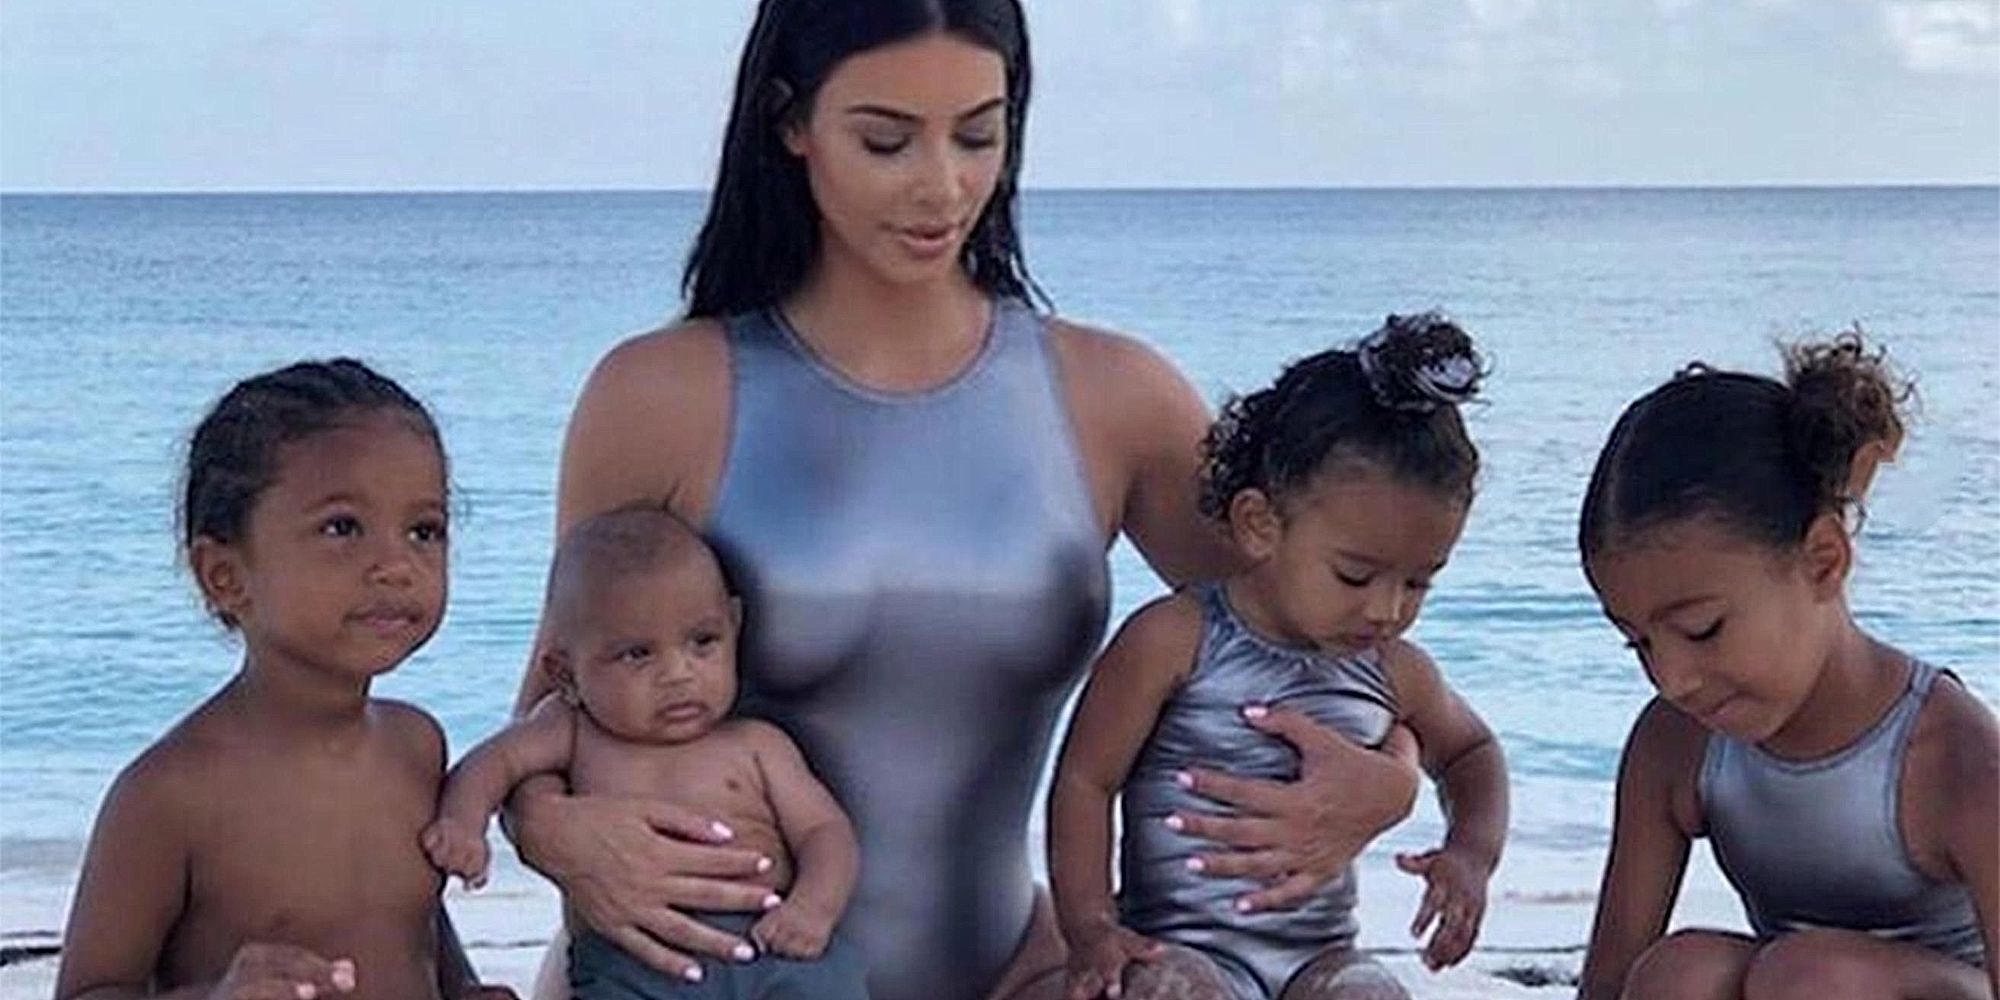 KUWTK: Kim Kardashian ‘Not OK’ After Son Saint Breaks His Arm